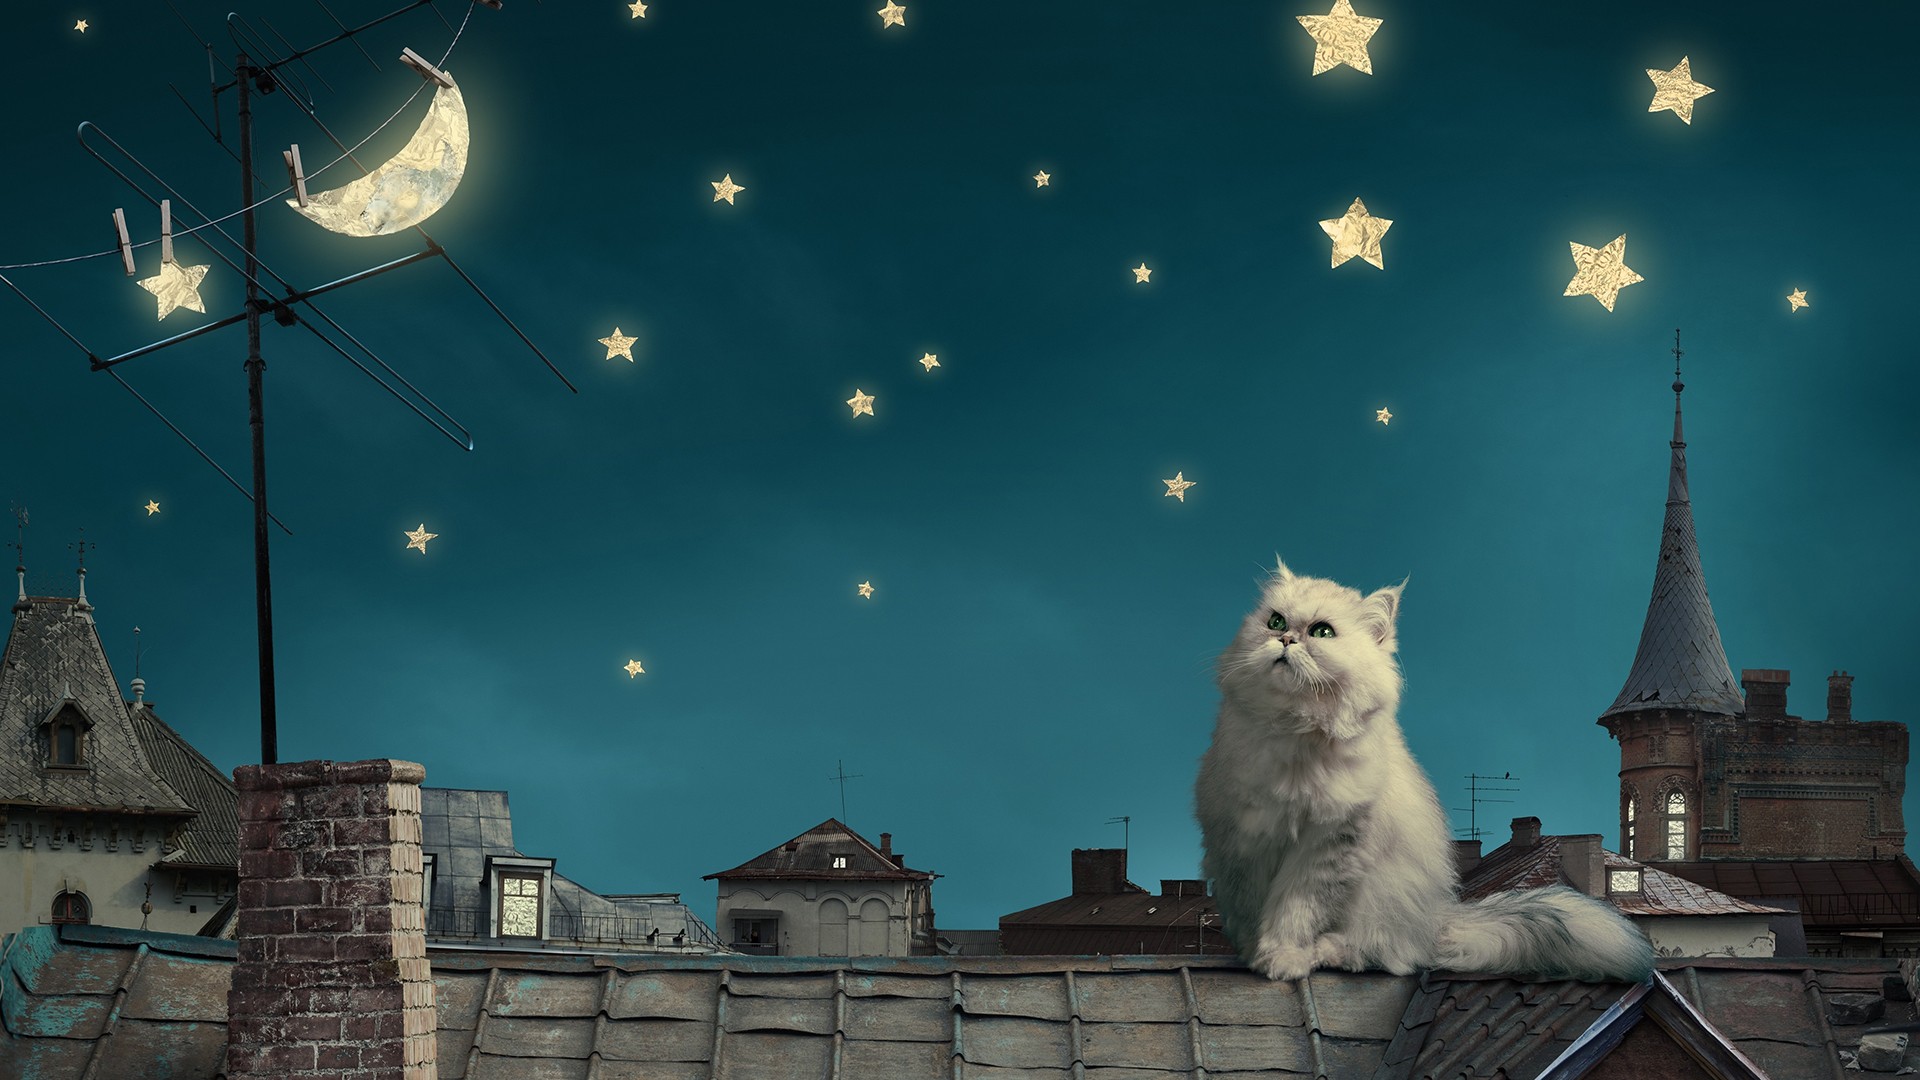 Cat moon and stars wallpaper 42338 ImgStockscom